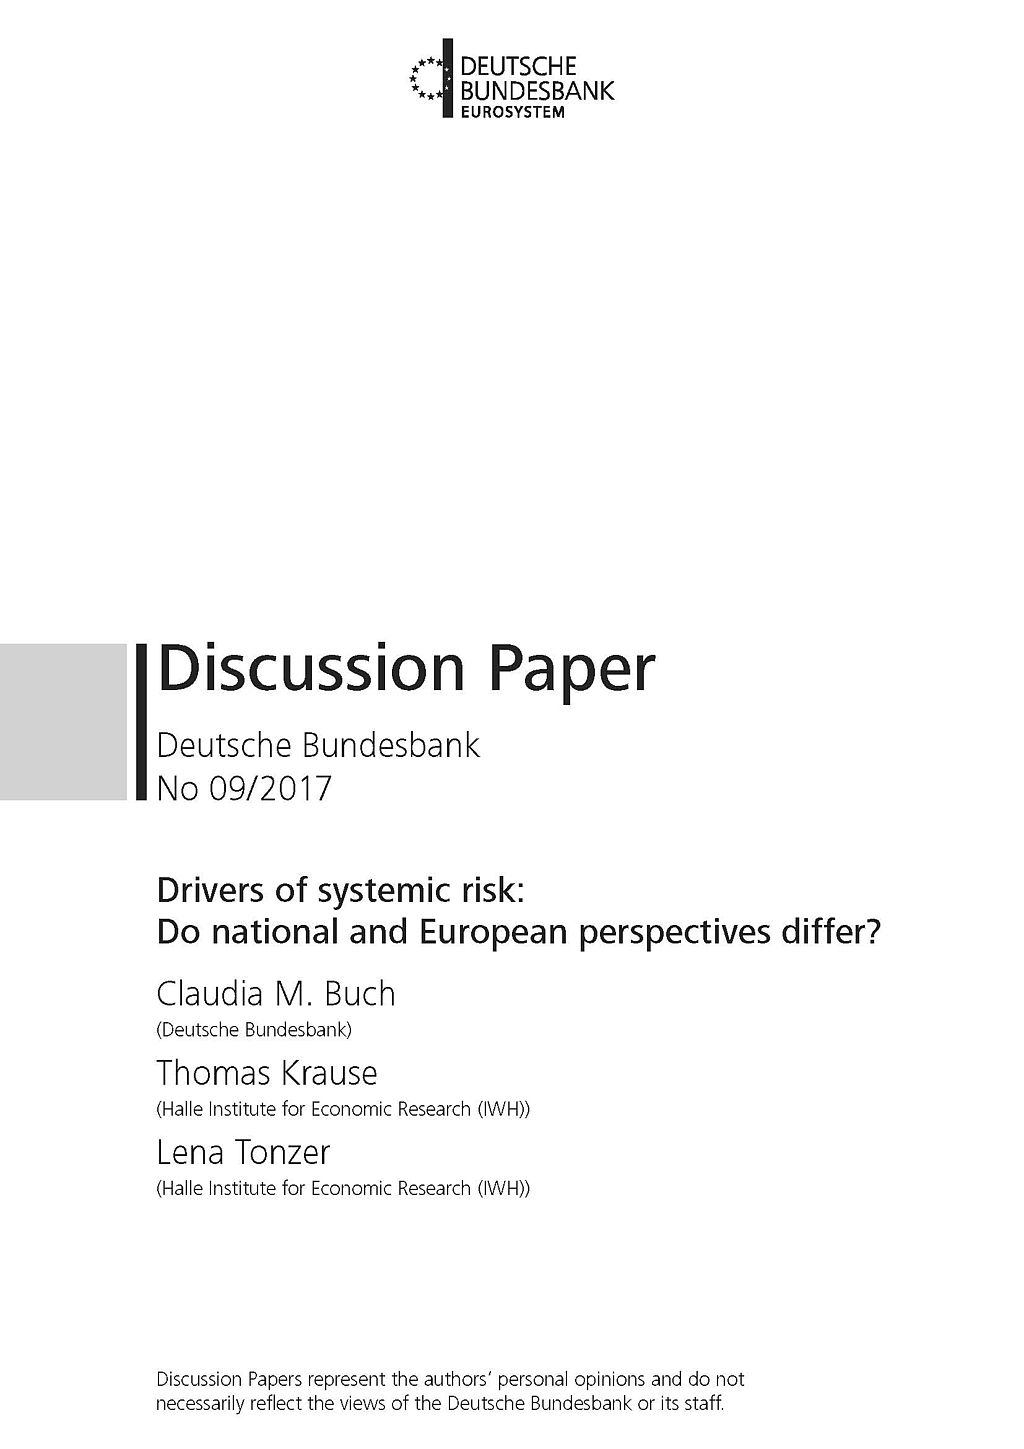 cover_Deutsche-Bundesbank-Discussion-Paper_2017-09.jpg